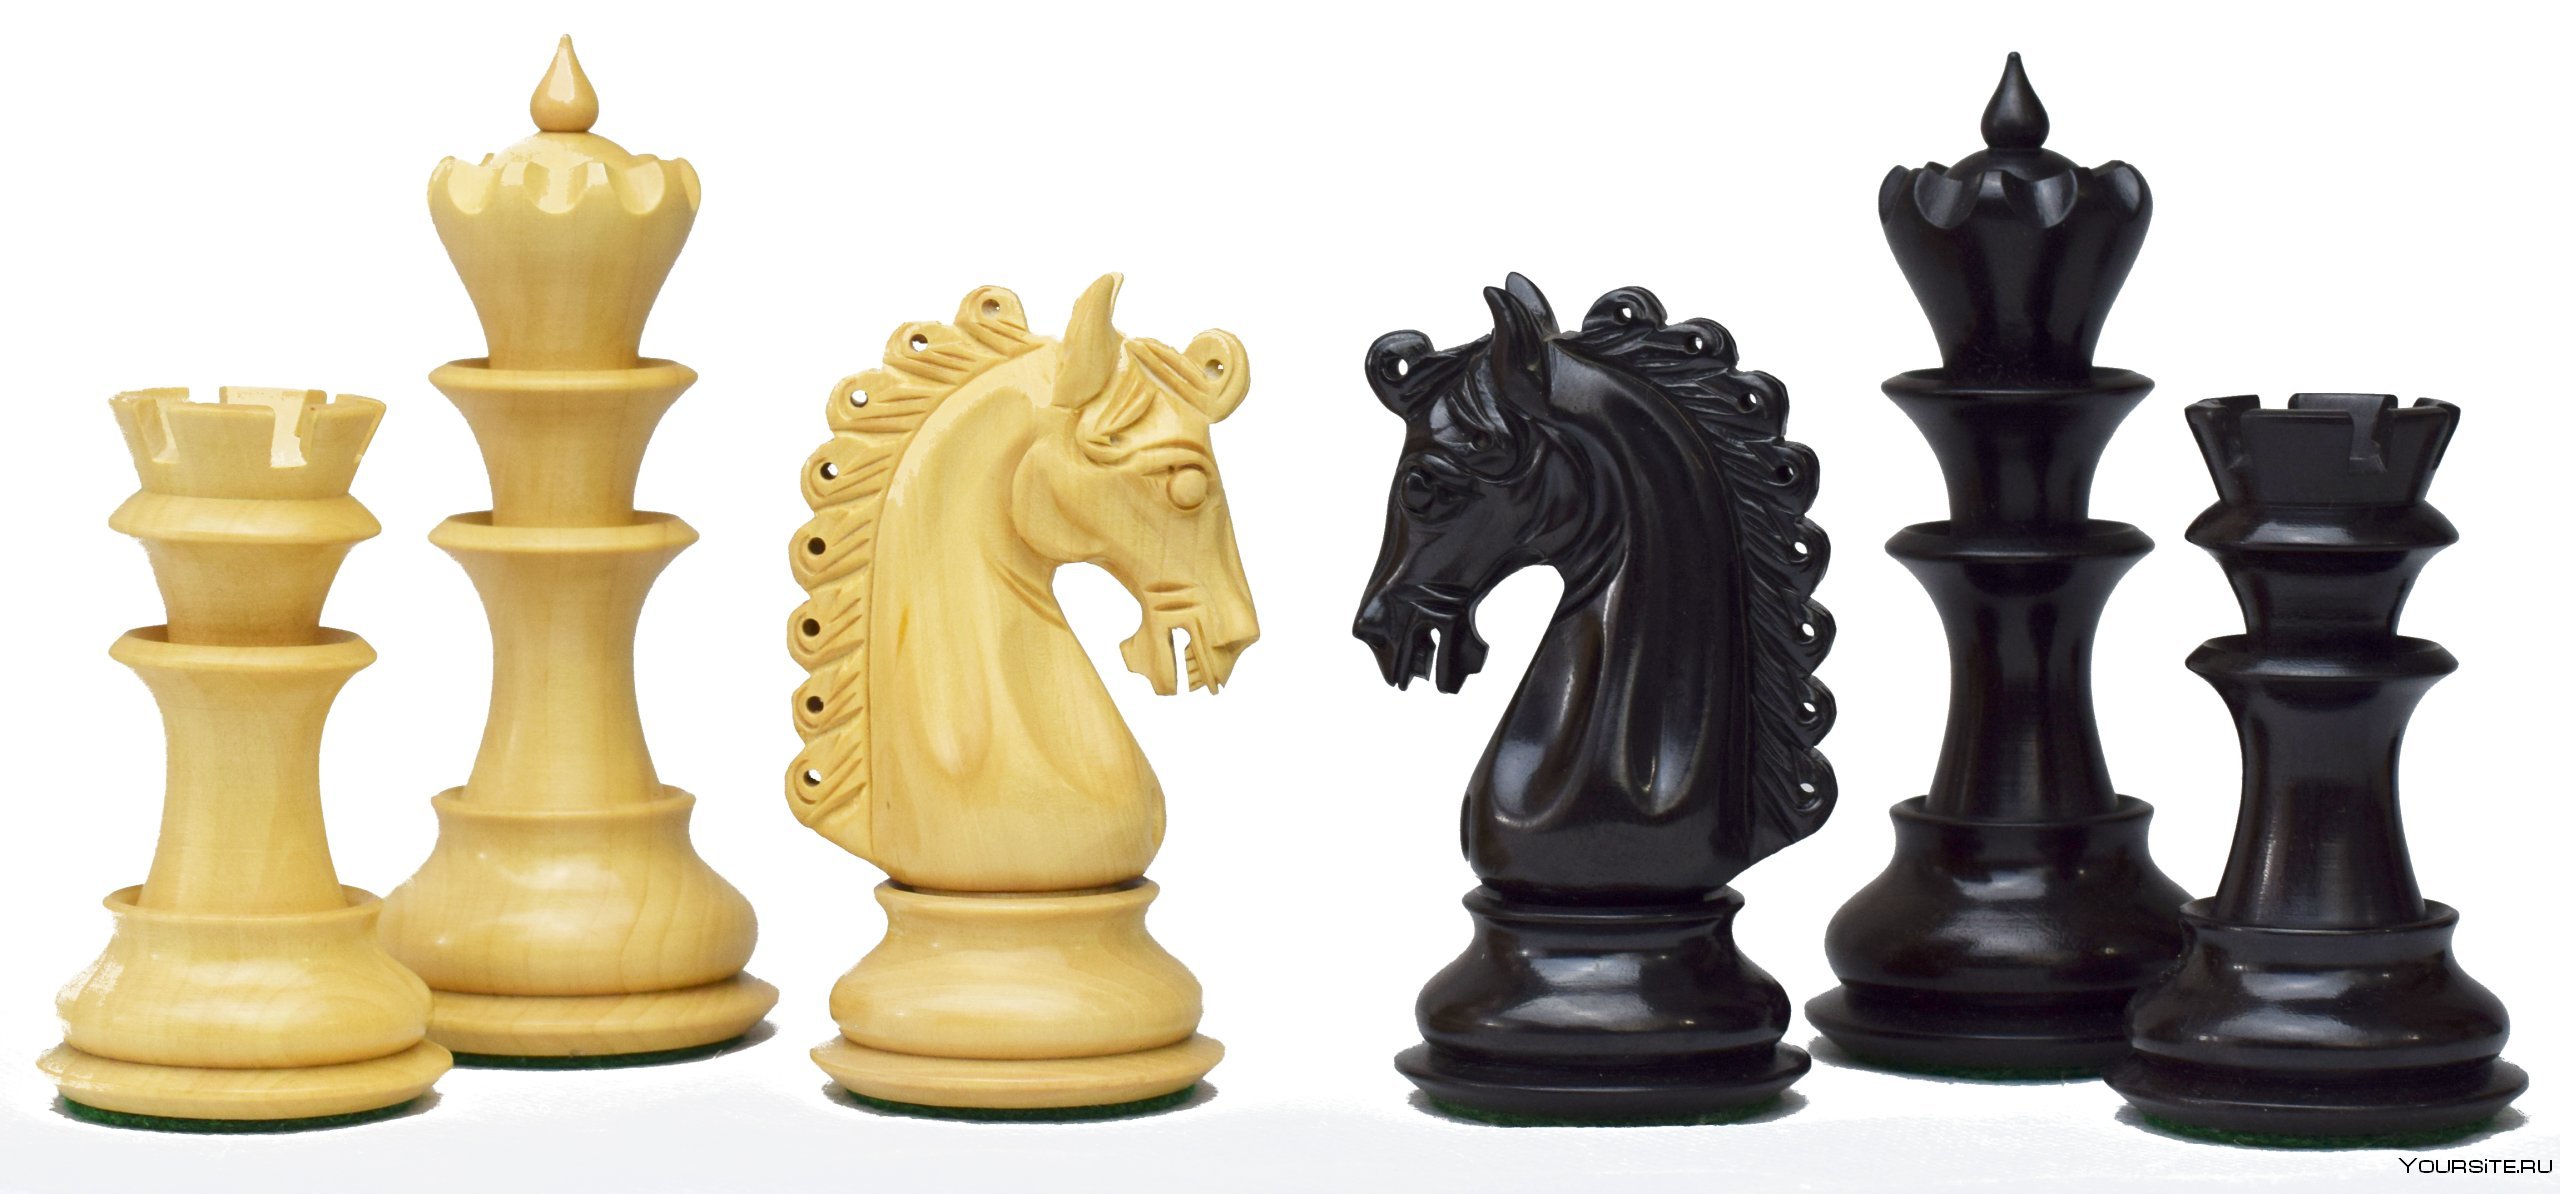 Король ладья слон конь. Слон и Ладья в шахматах фигура. Конь Король и ферзь шахматные фигуры. Король, ферзь, конь. Шахматы конь ферзь Ладья.